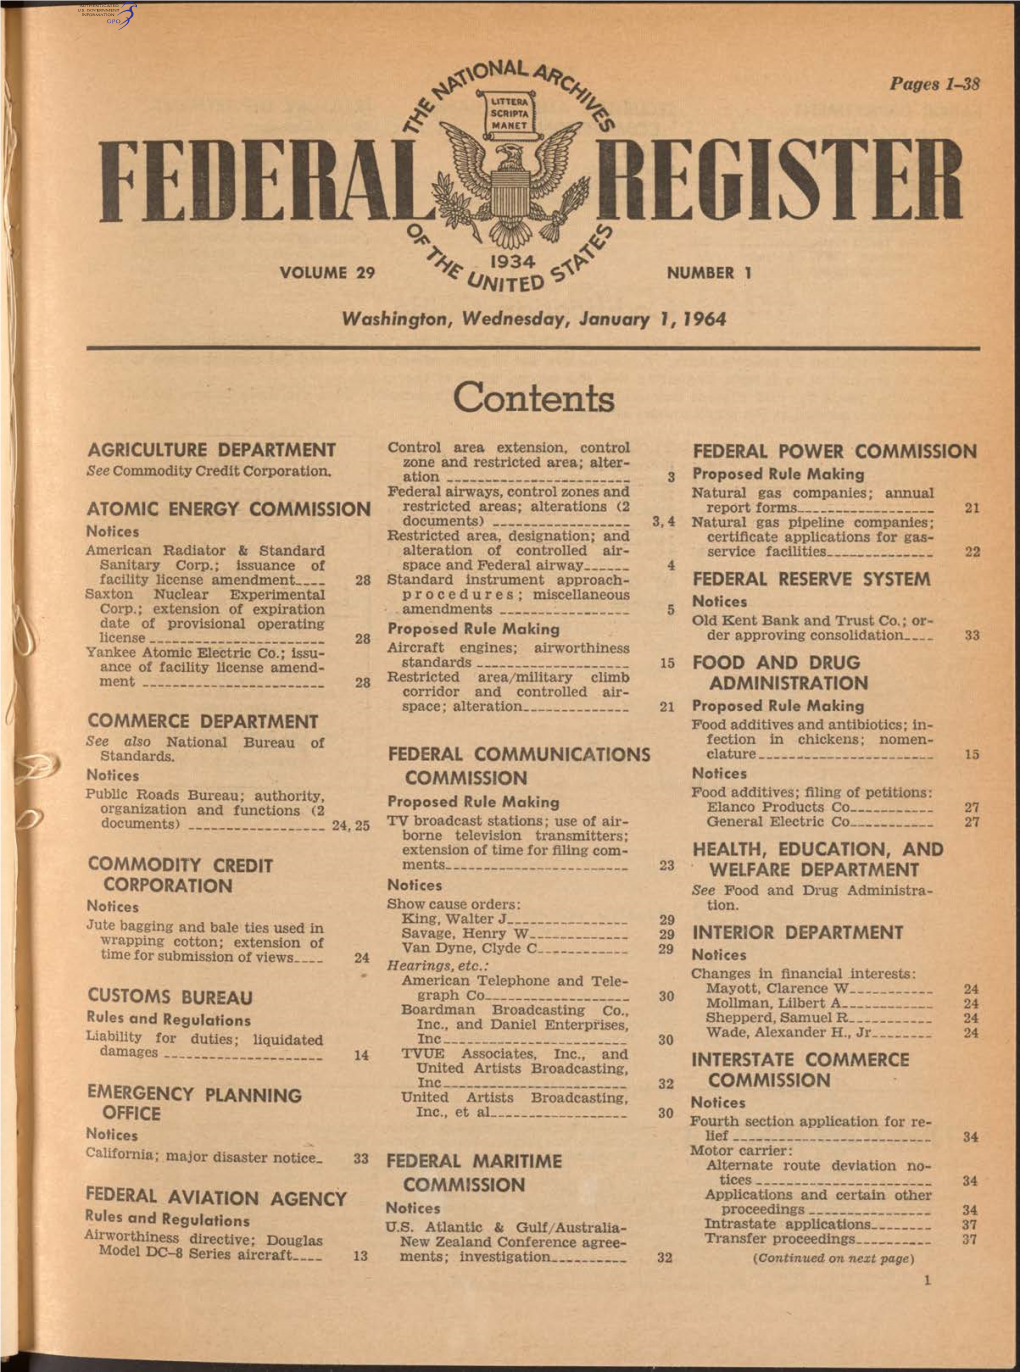 Federal Register ^ A